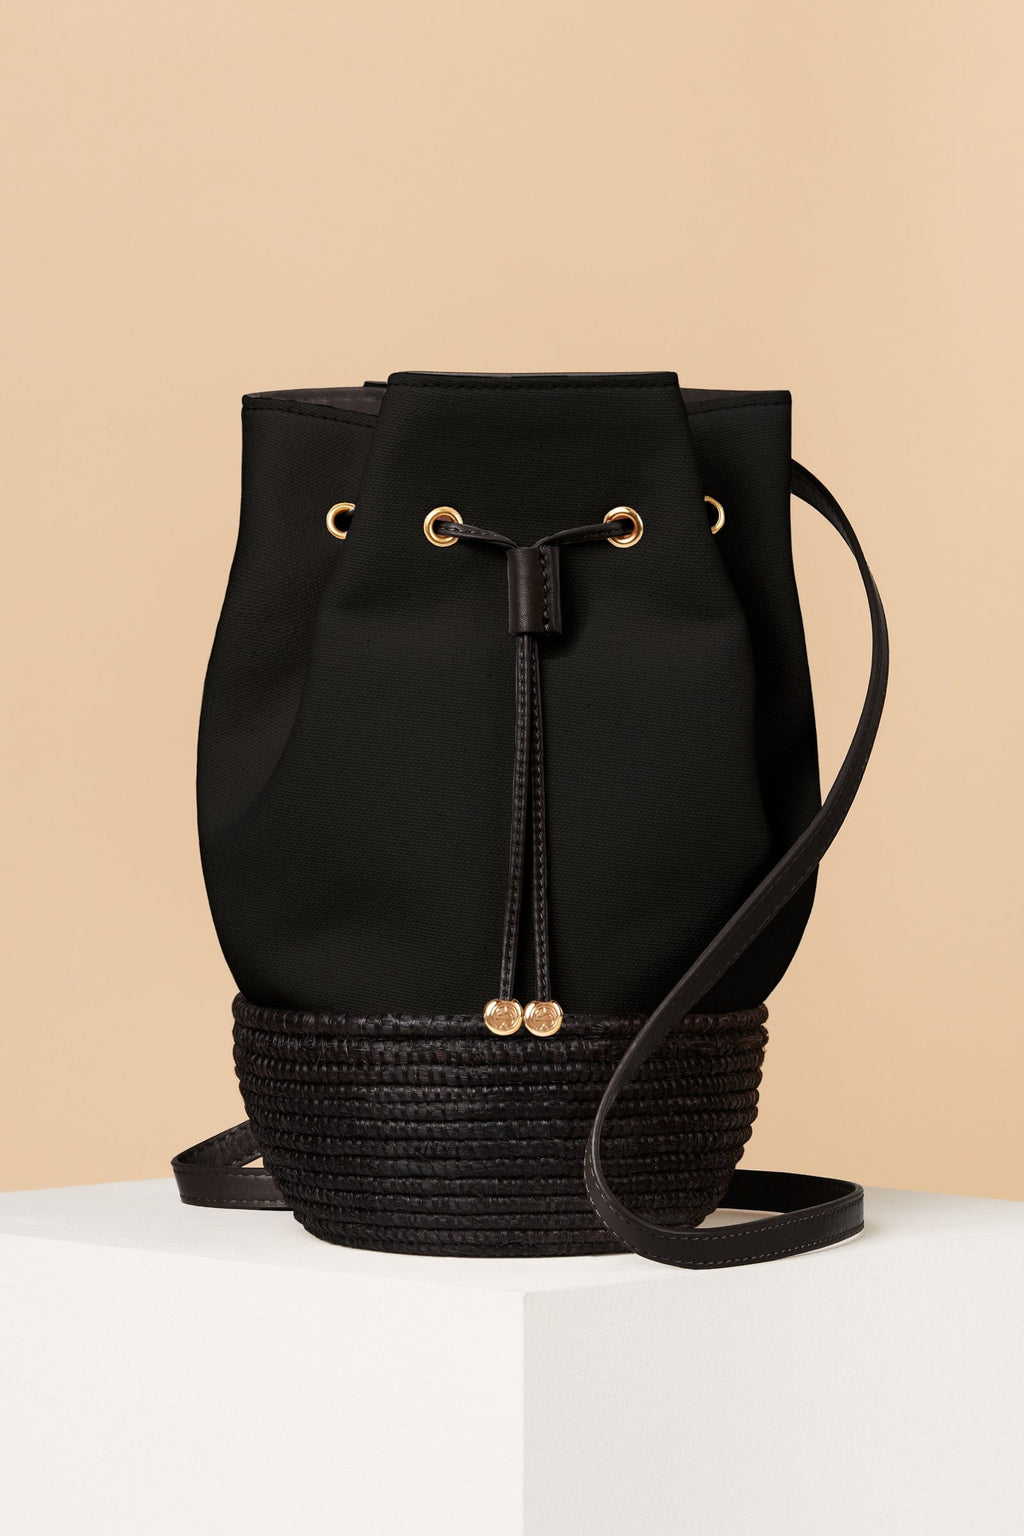 PRADA Small Woven Leather Bucket Bag in Black